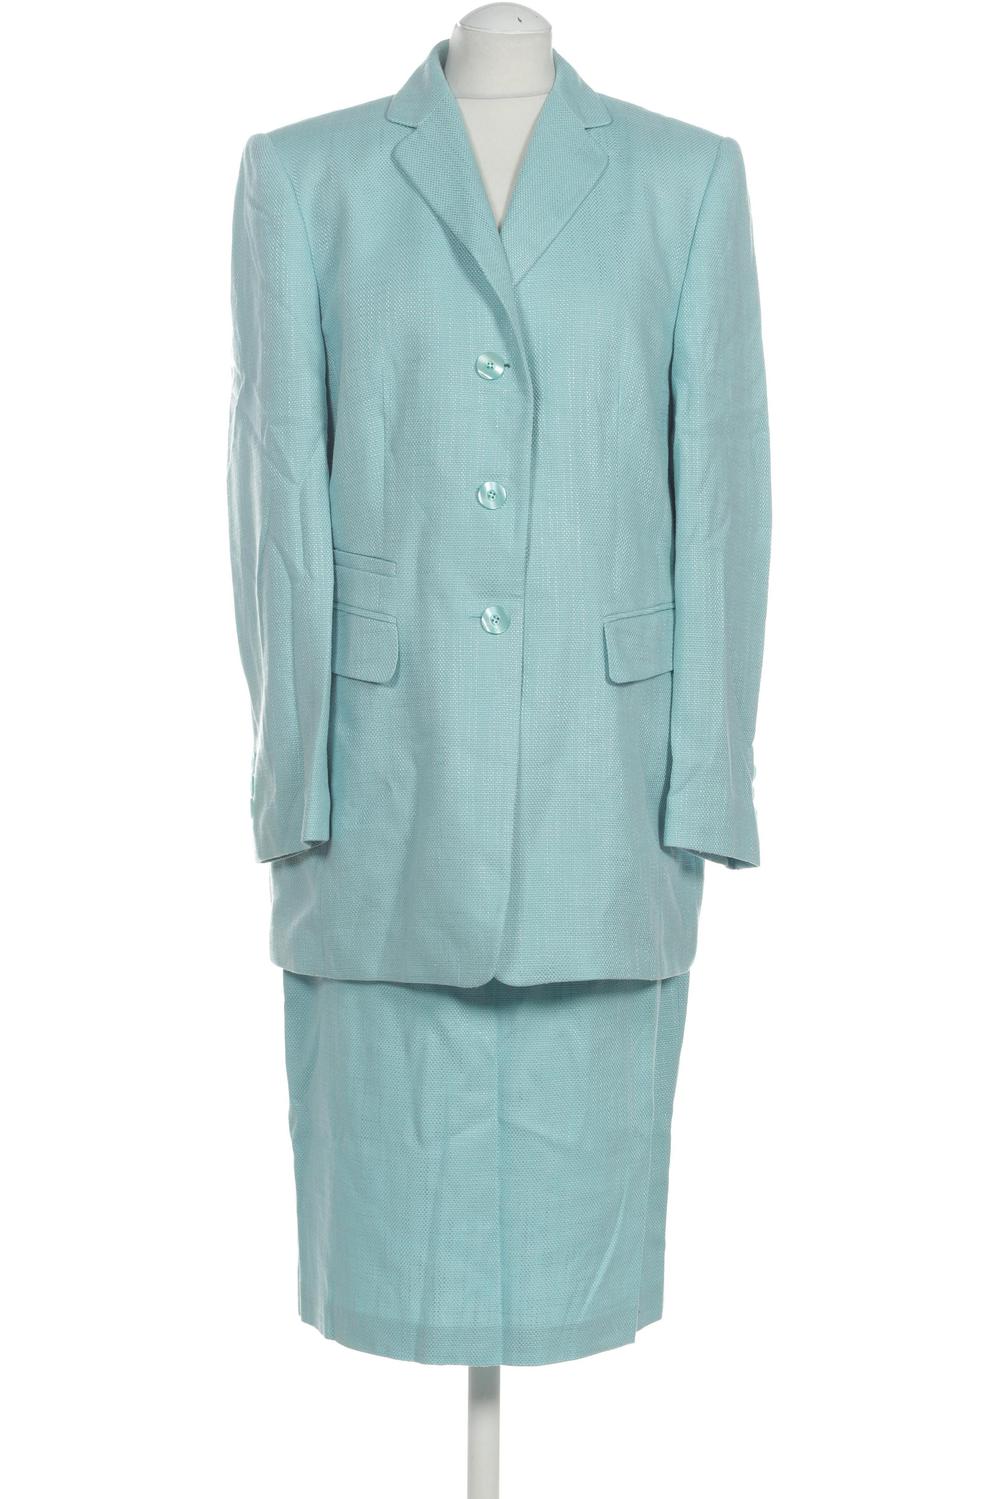 Basler Anzug Damen Kostum Suit Gr De 40 Baumwolle Seide Viskose Blau 8d04fae Ebay